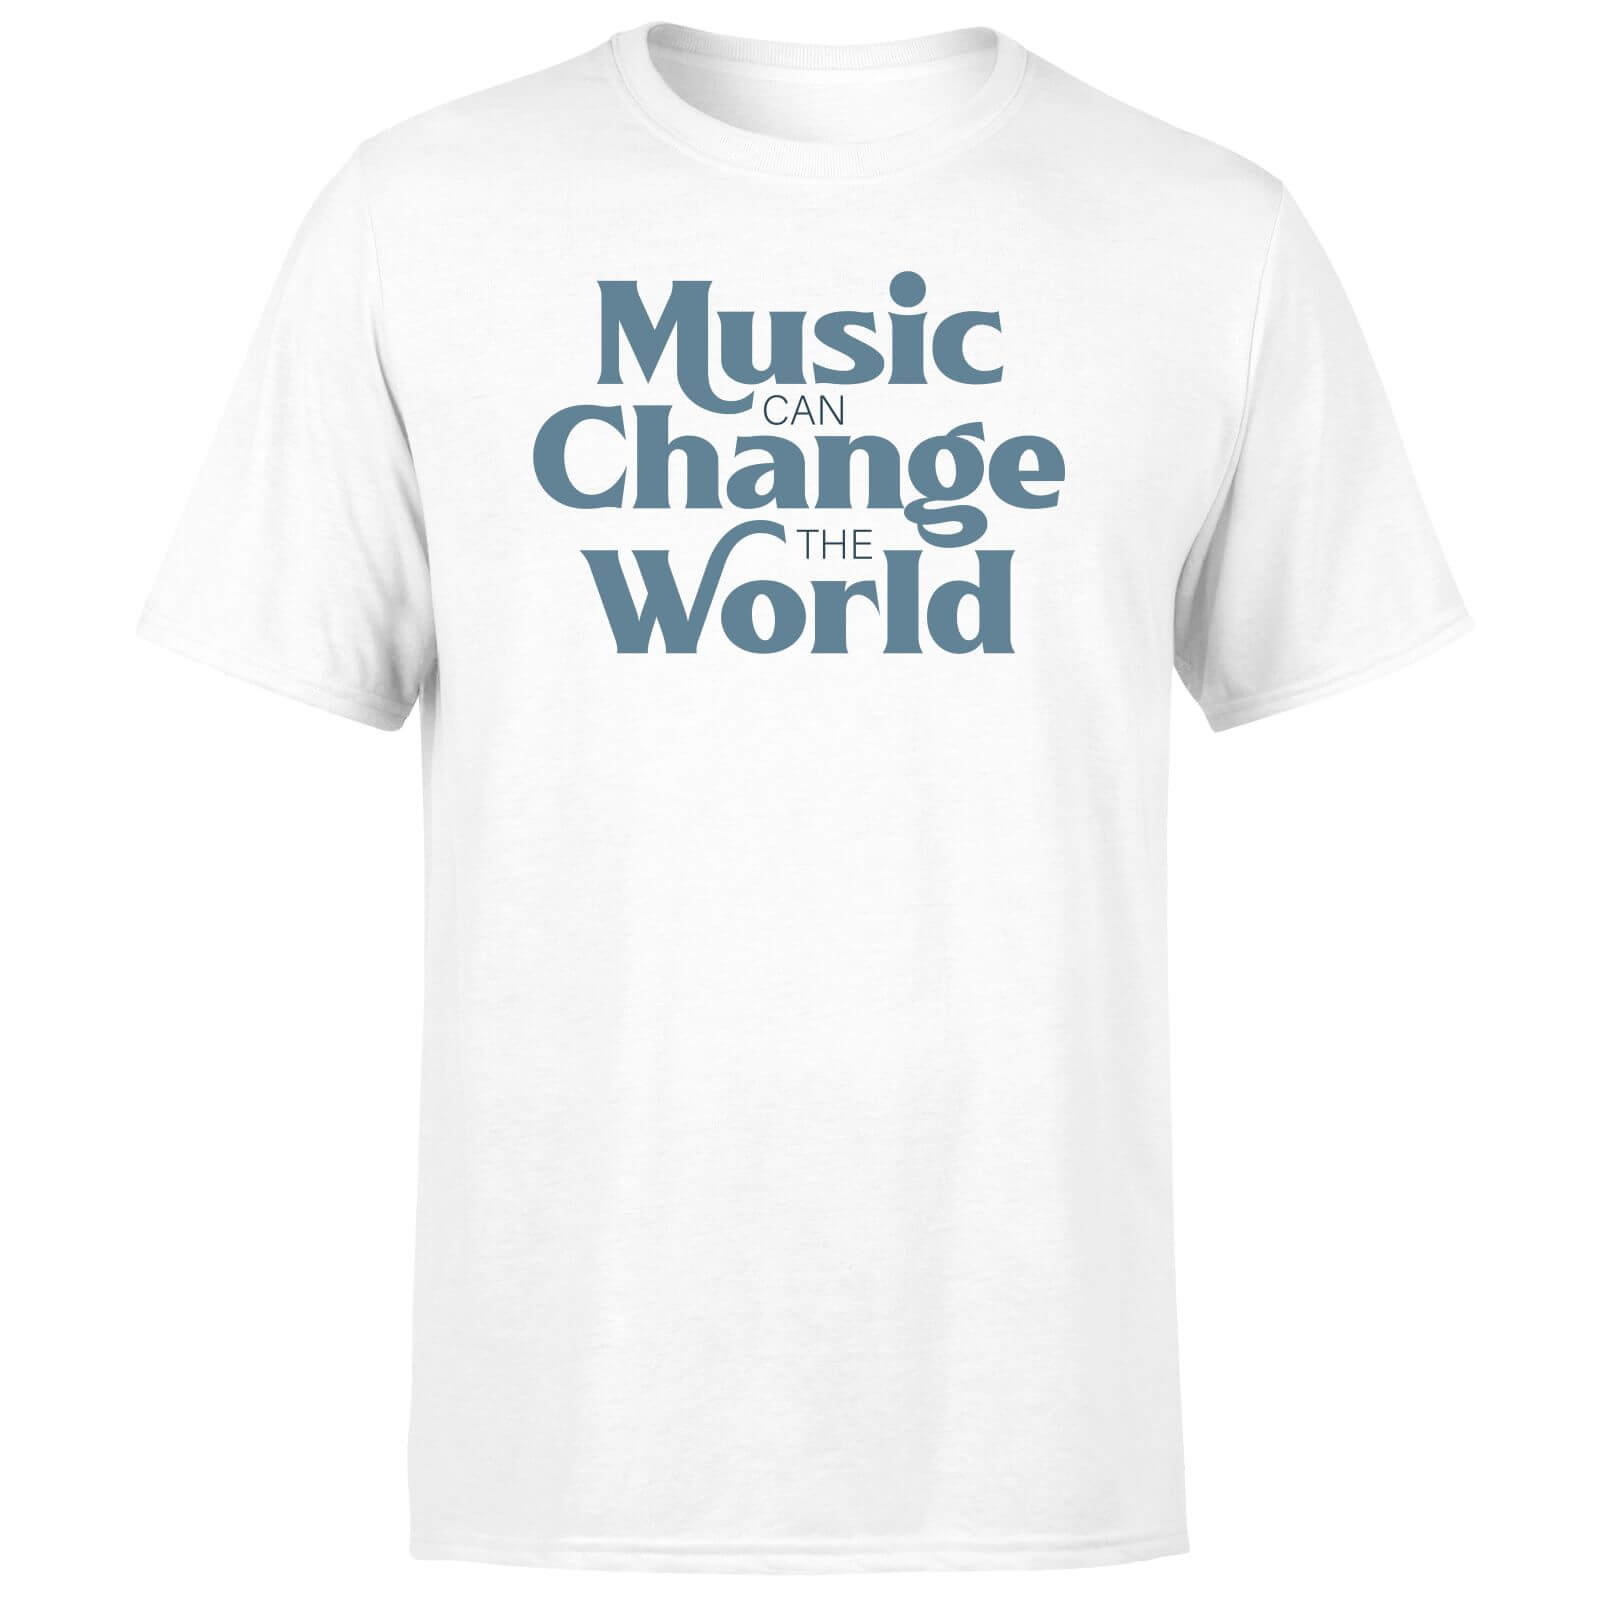 Music Can Change The World Men's T-Shirt - White - XS - White